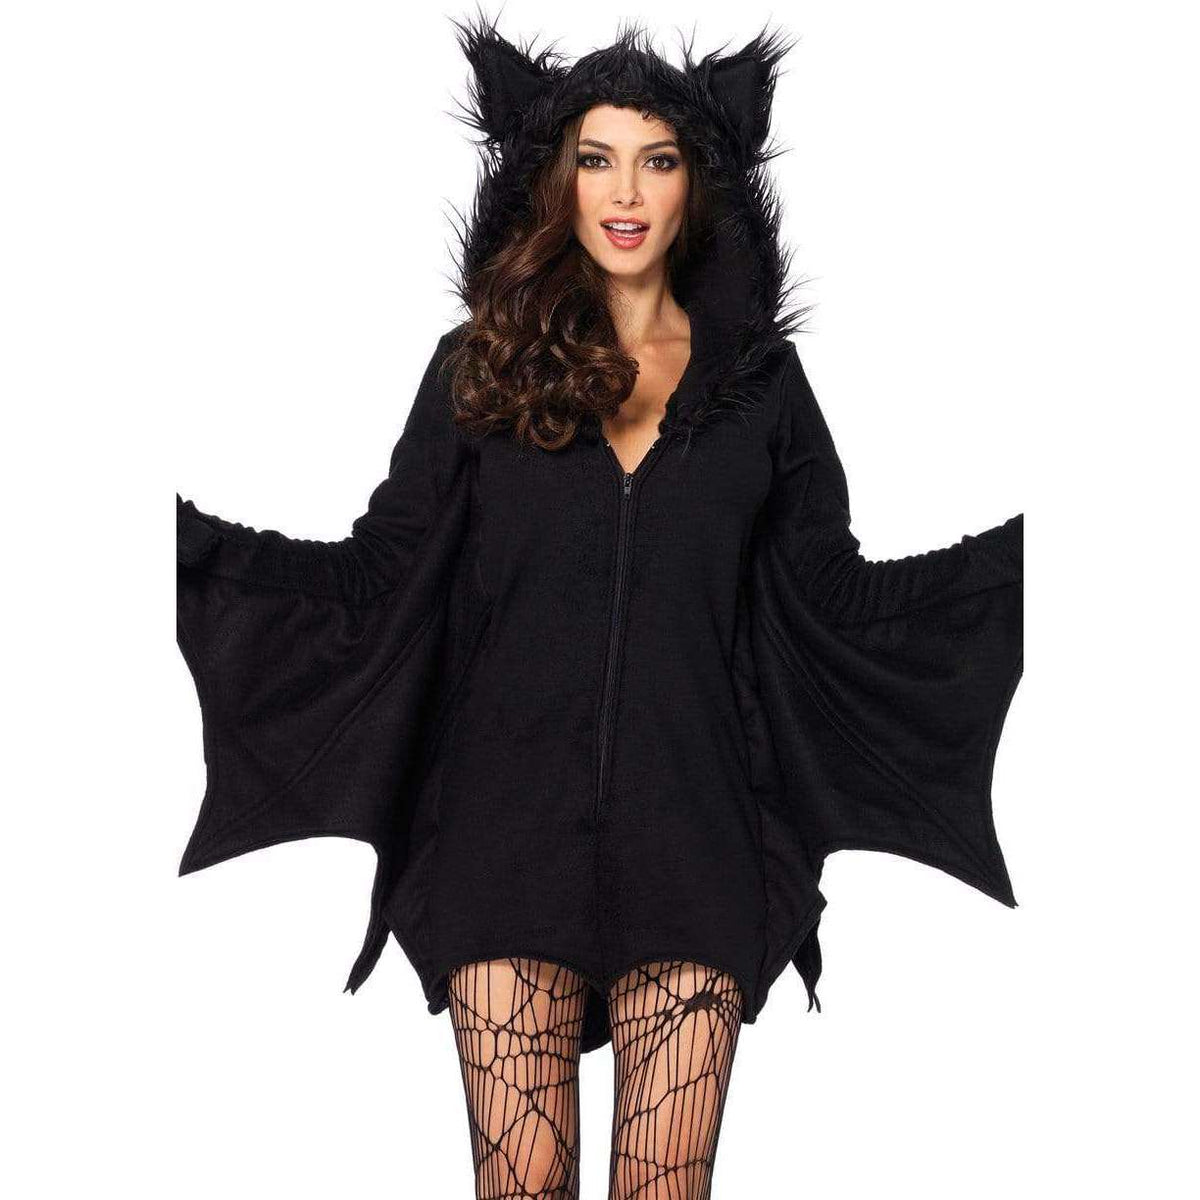 Cozy Bat Women's Adult Costume